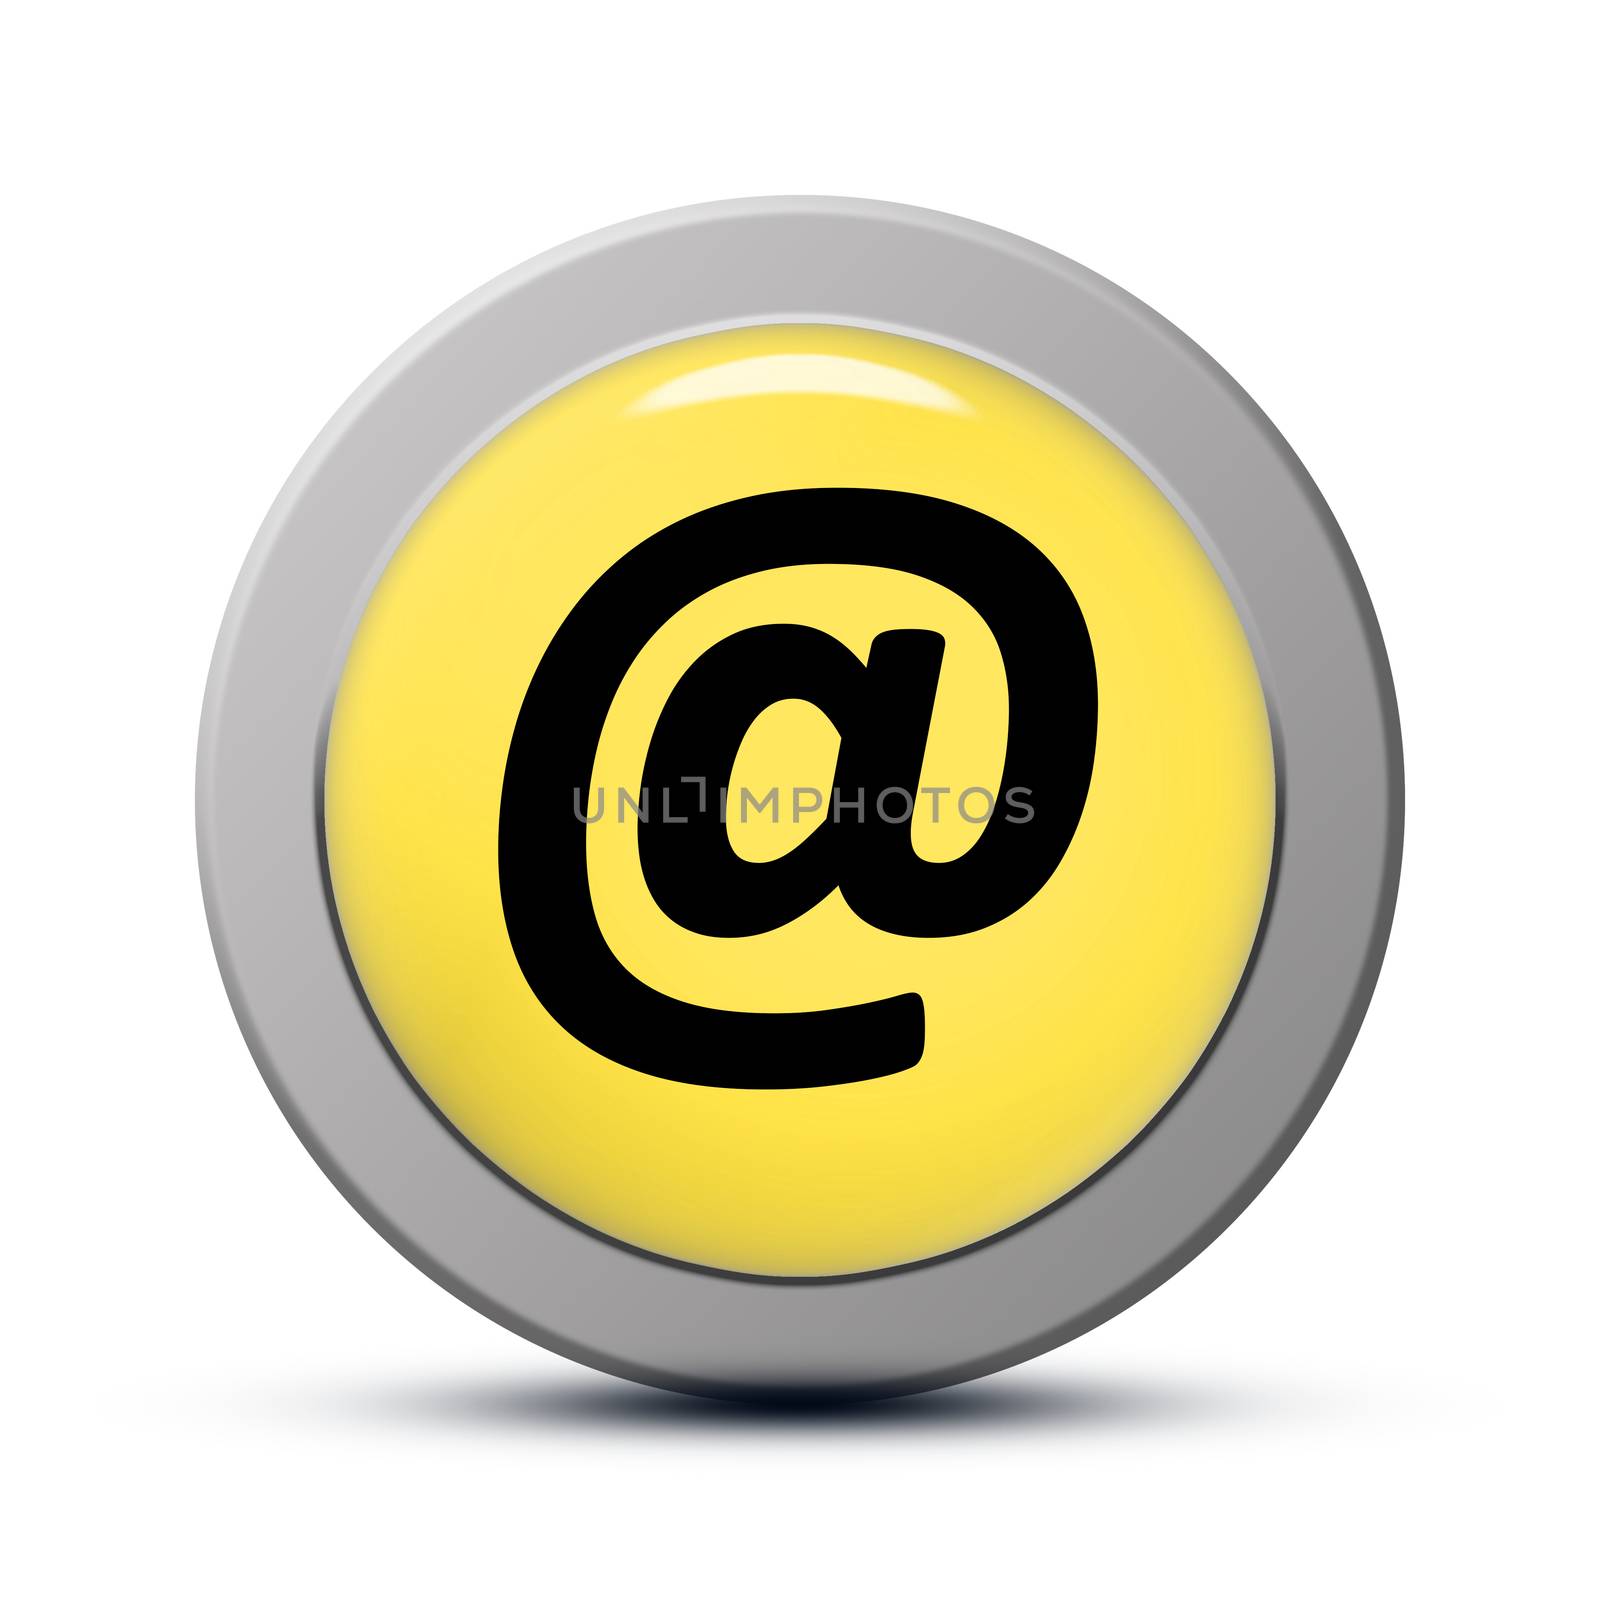 Email address icon by Mazirama